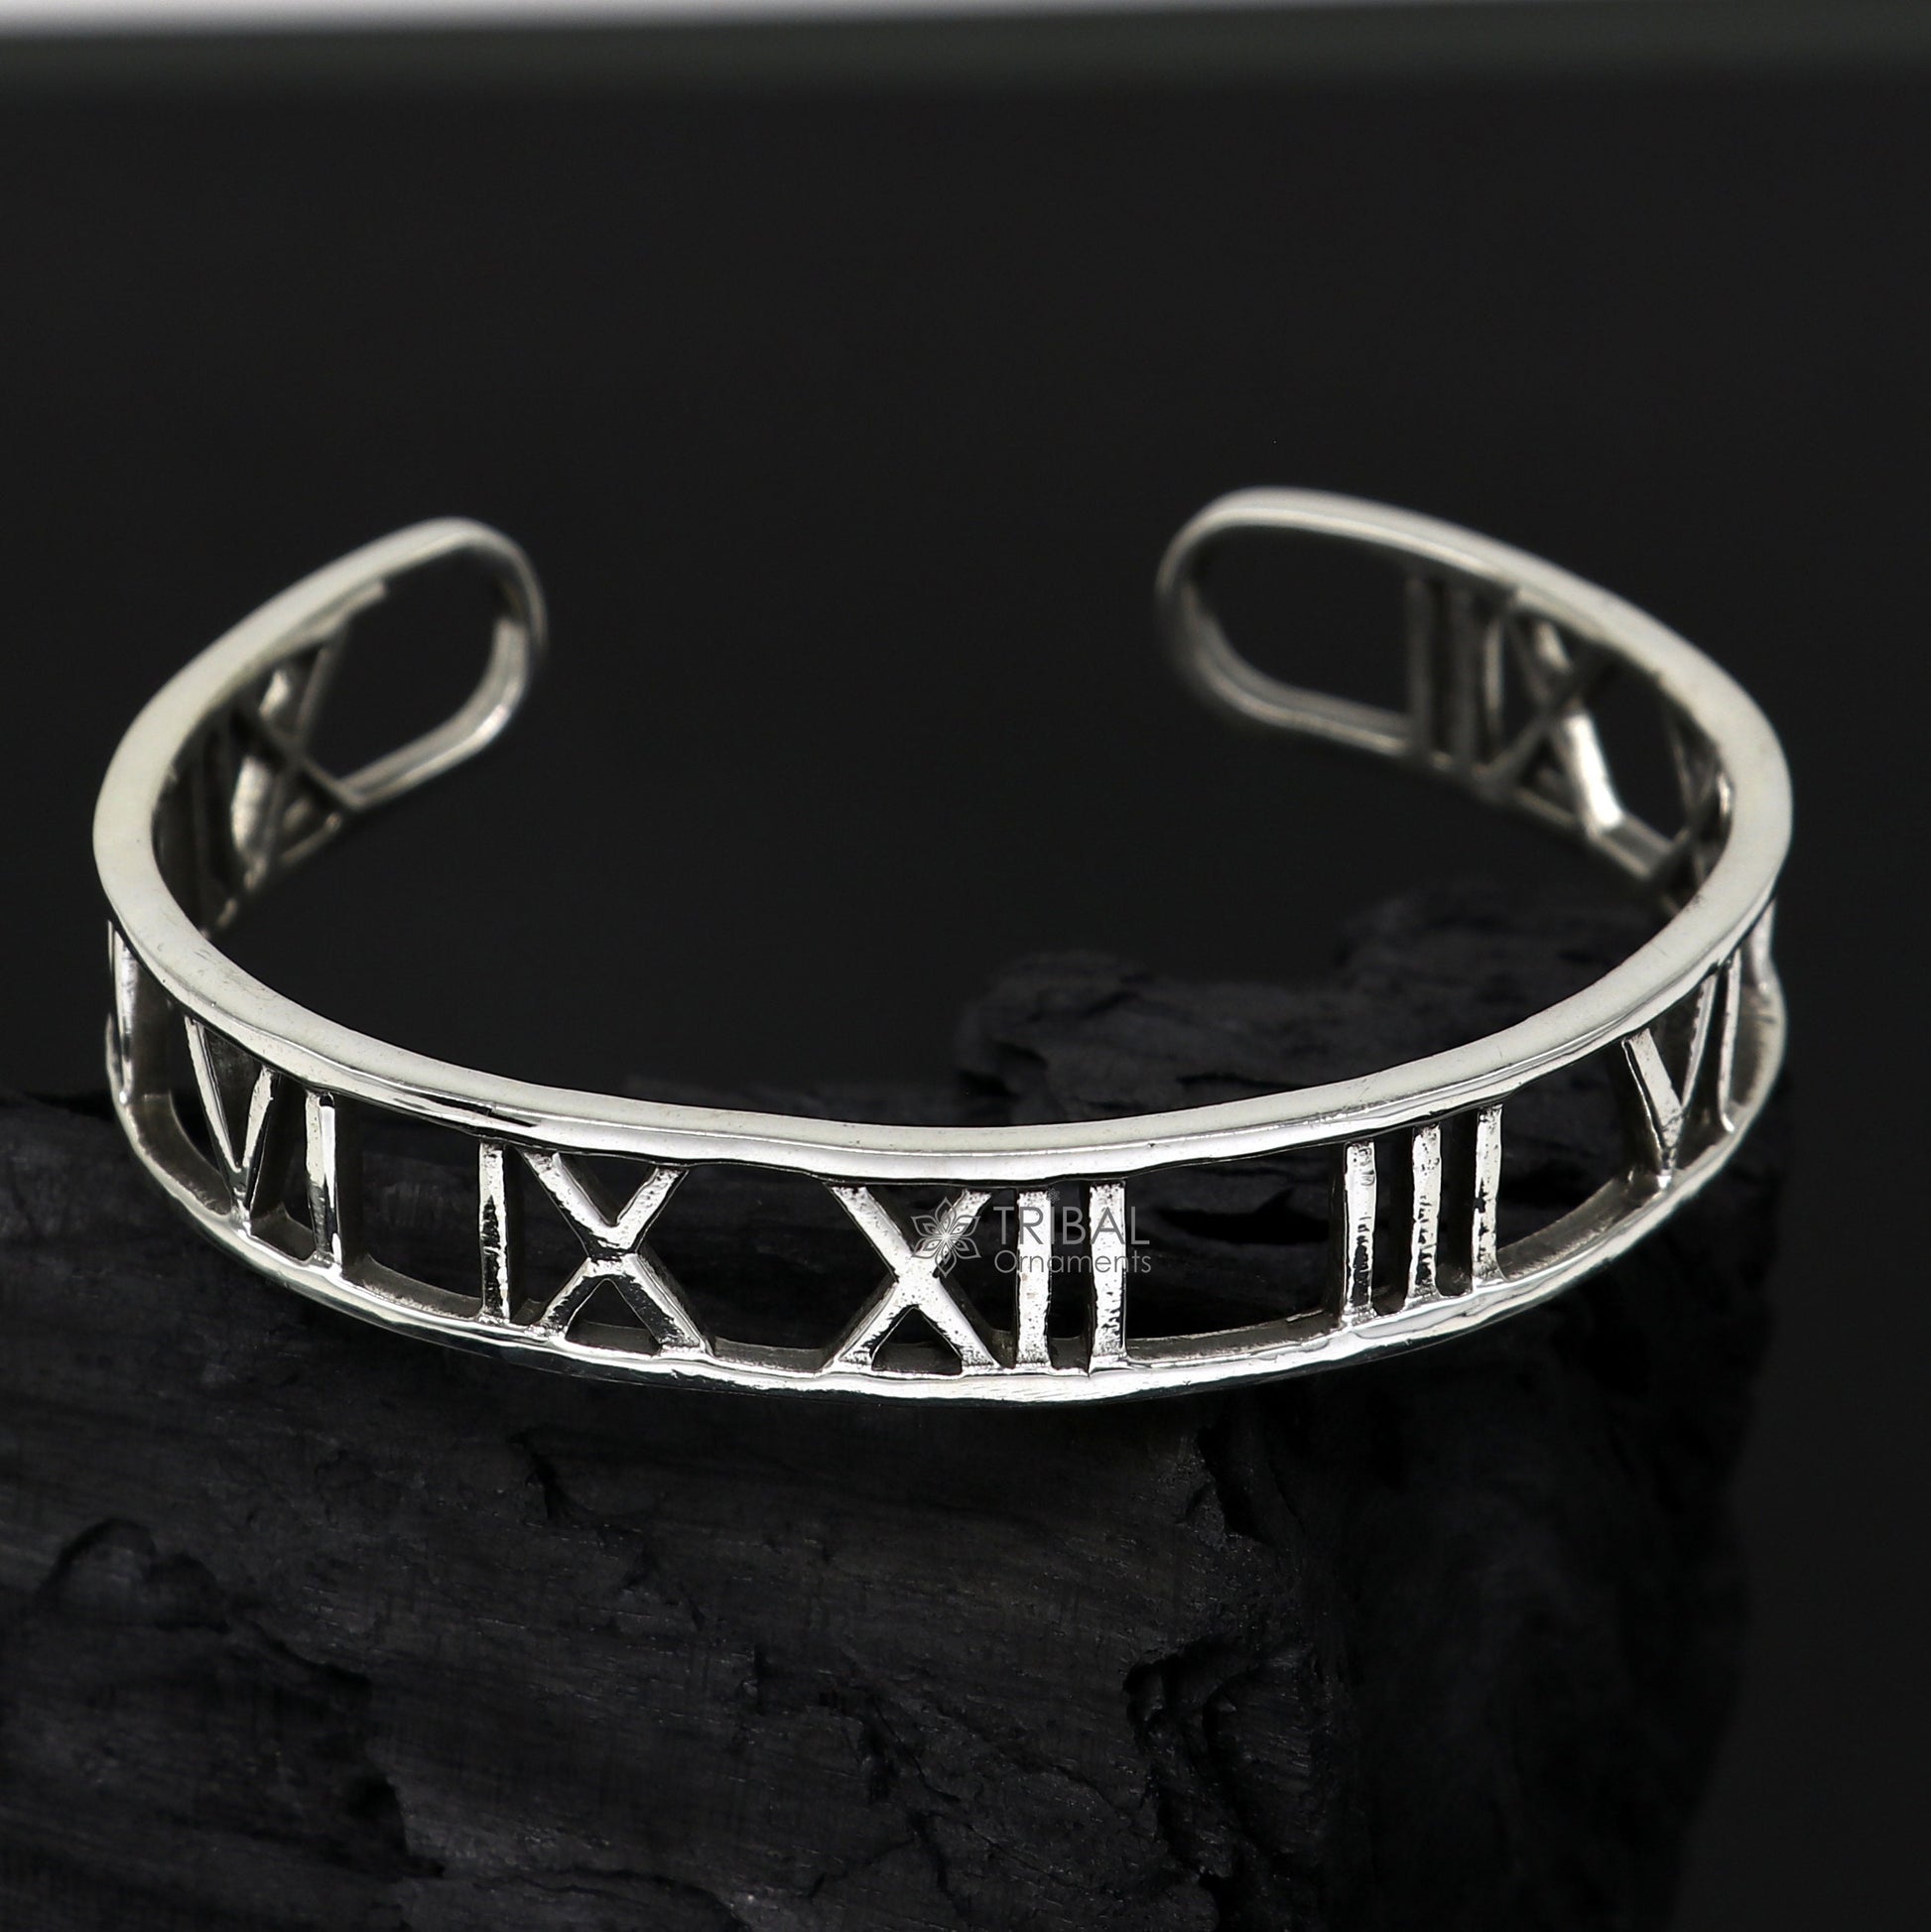 925 sterling silver handmade solid Roman number design fashion kada cuff bracelet, cuff kada unsex gifting jewelry solid silver kada cuff153 - TRIBAL ORNAMENTS